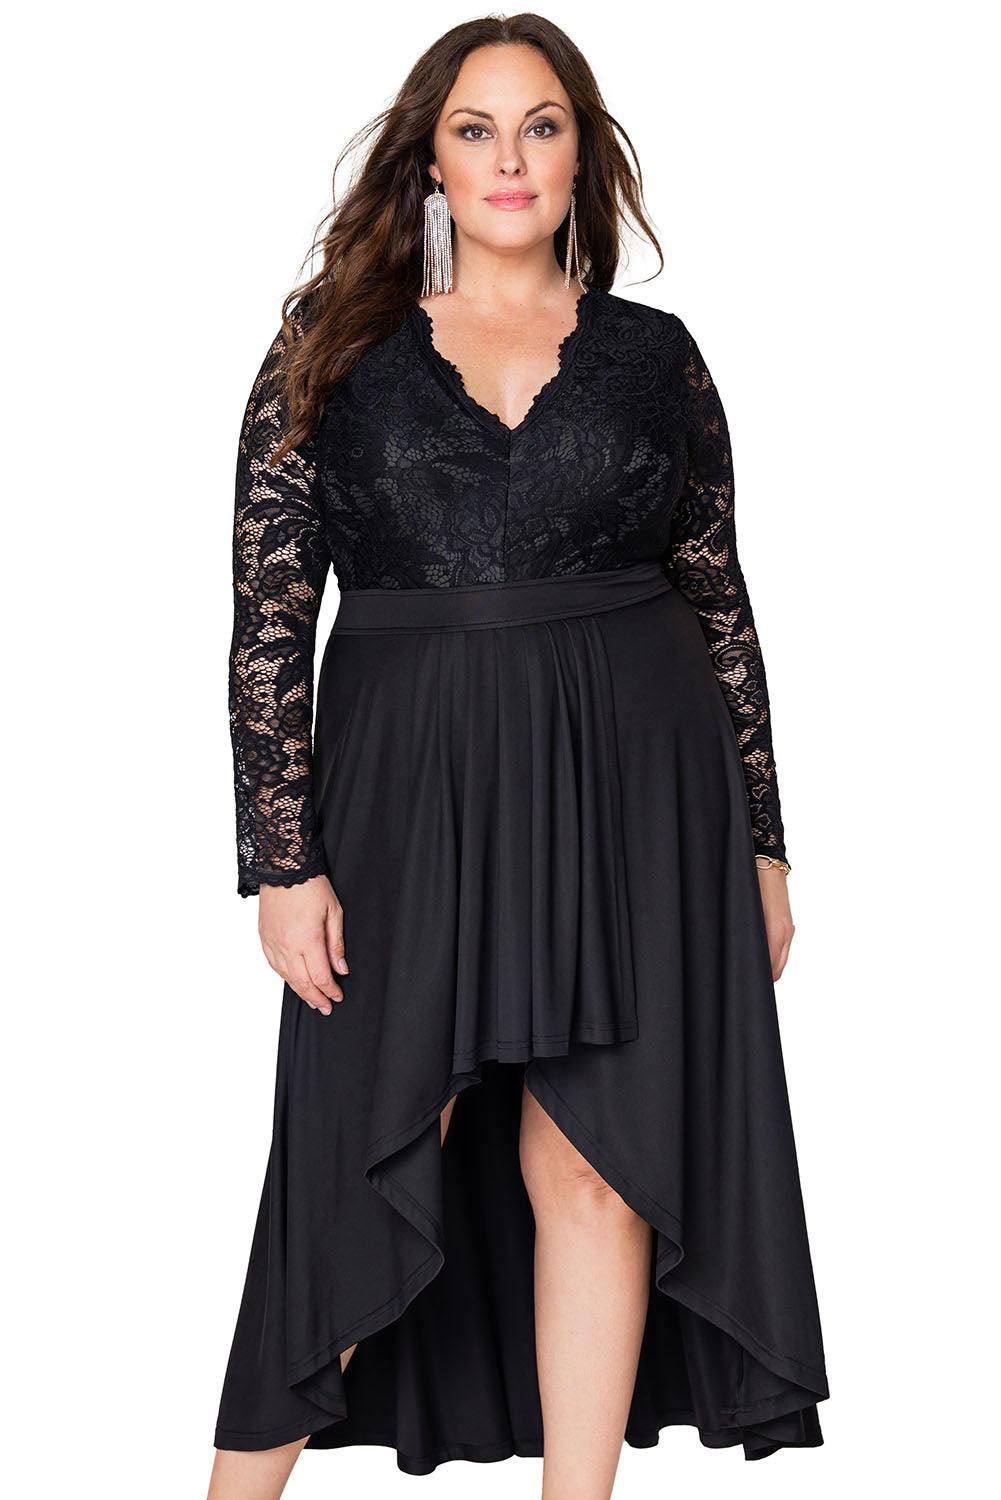 Plus Size High-Low Lace Contrast Evening Dress - L & M Kee, LLC